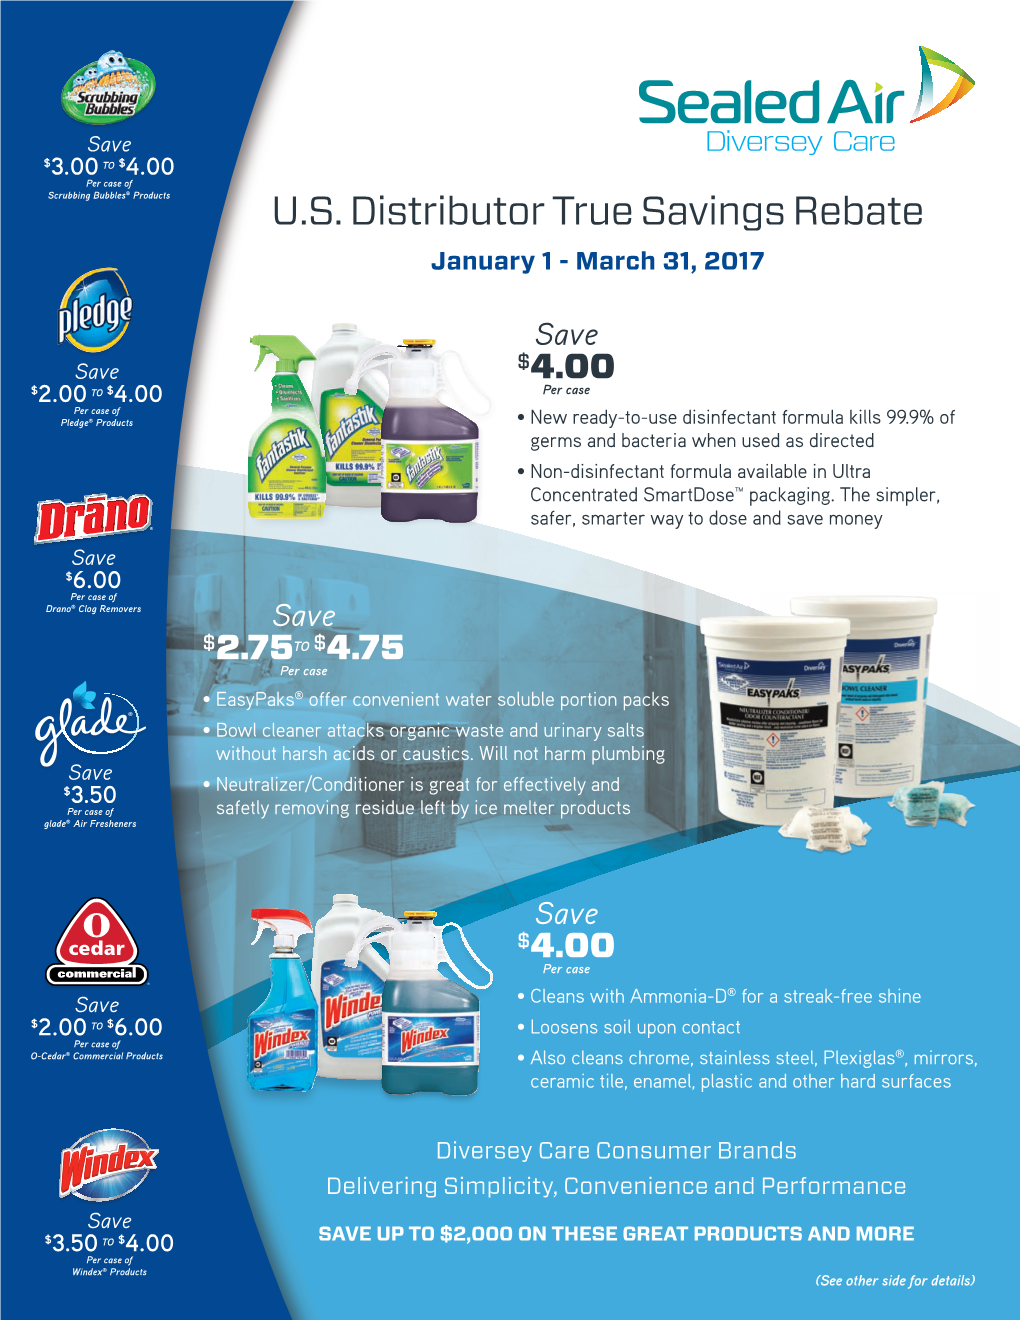 U.S. Distributor True Savings Rebate January 1 - March 31, 2017